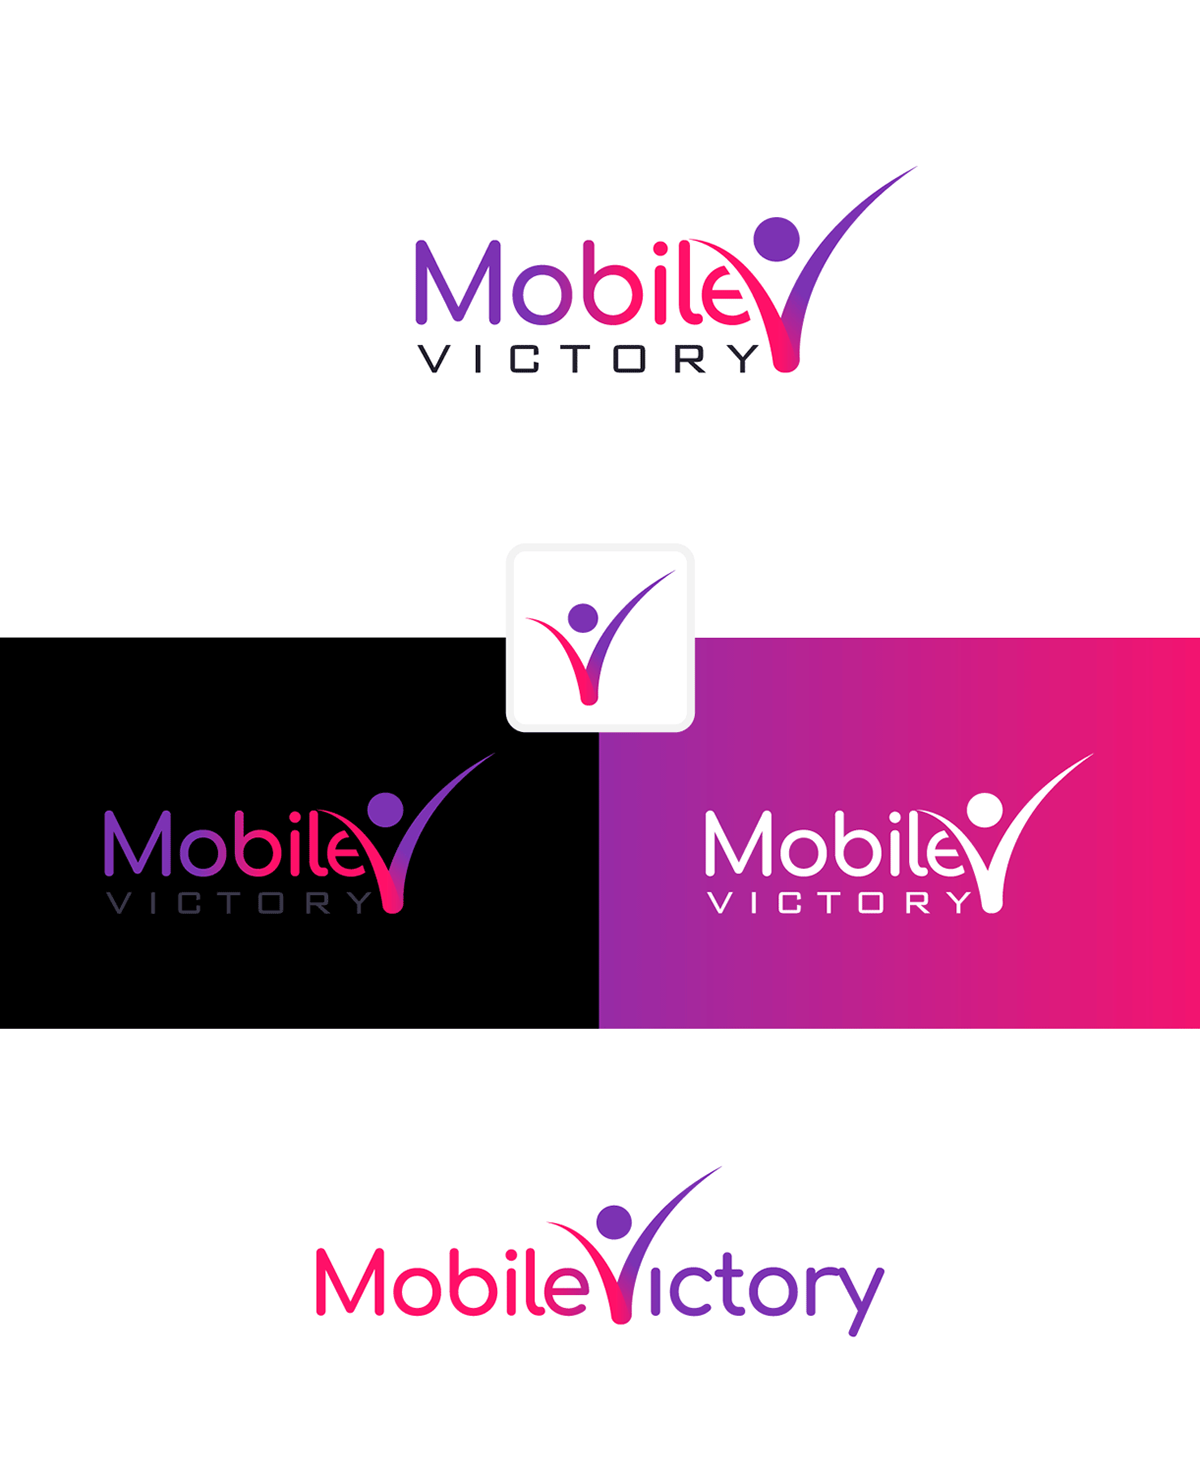 mobile Victory logo design